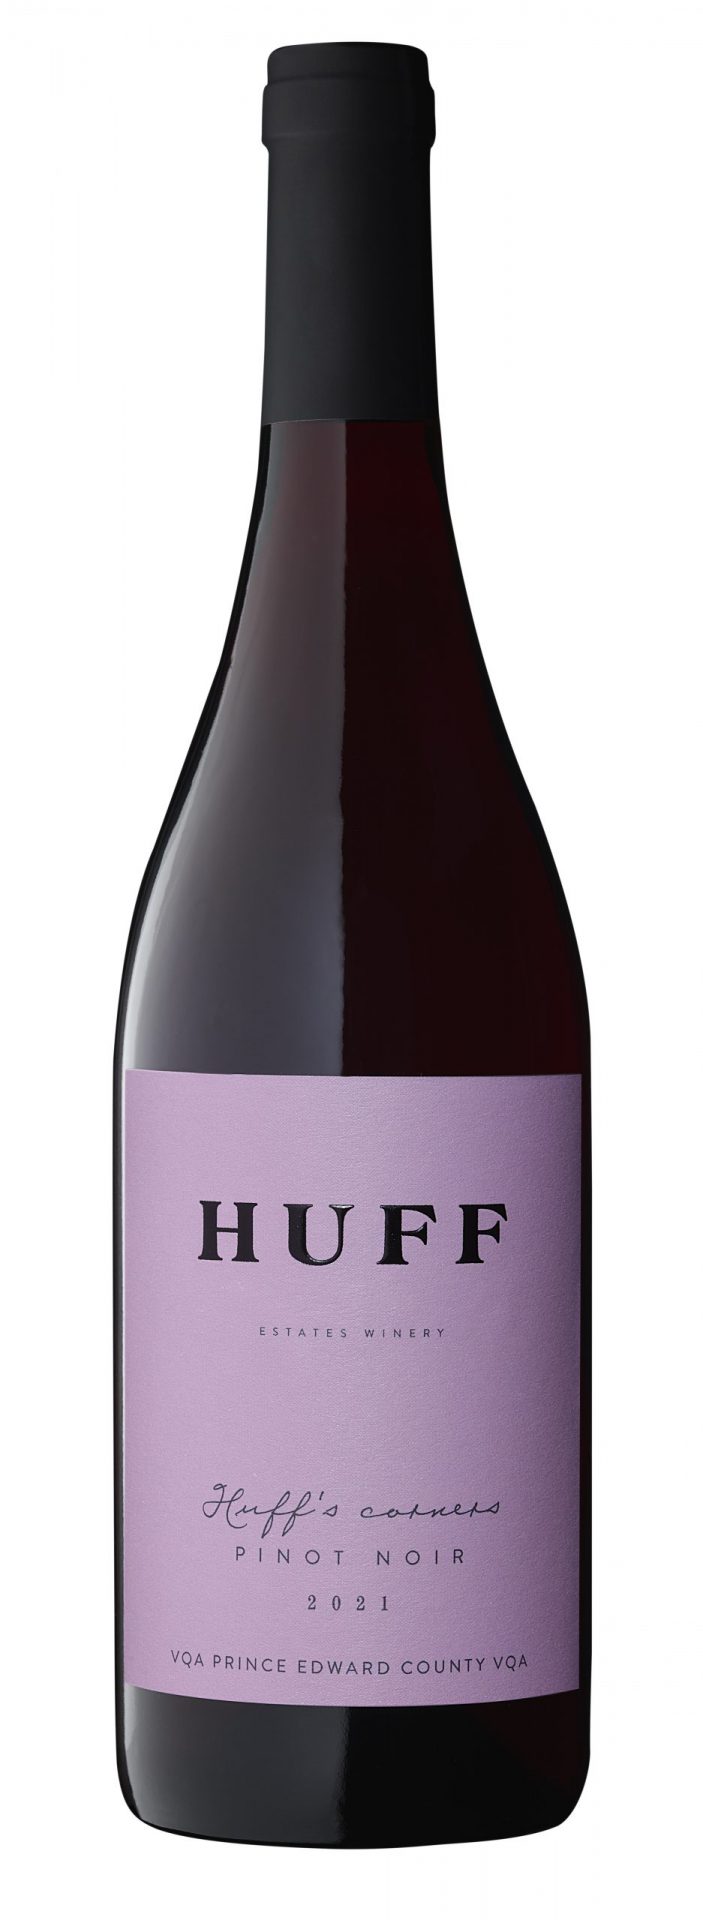 2021 Huffs corners Pinot noir-v3